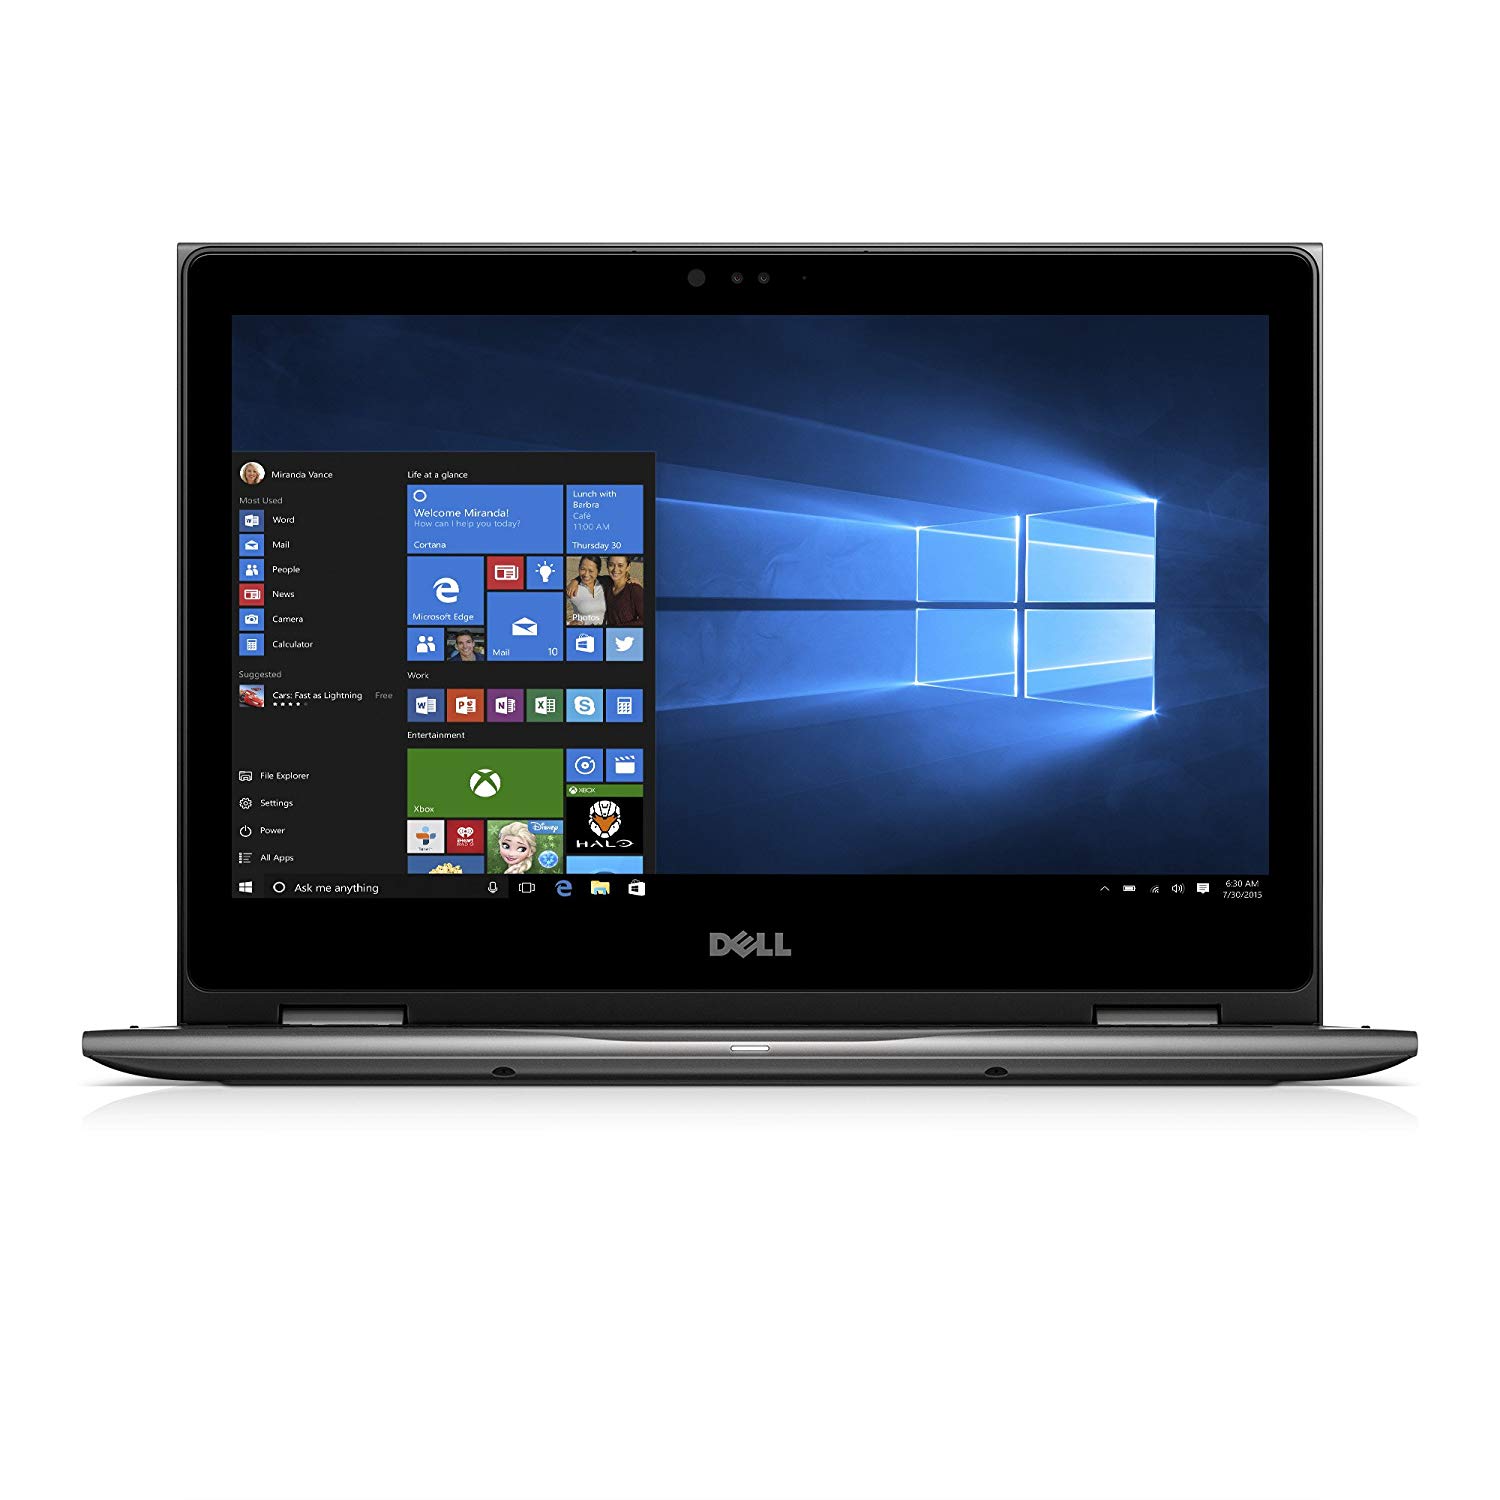 Dell Inspiron 13 5378 Core i3 7th Generation Laptop Computer